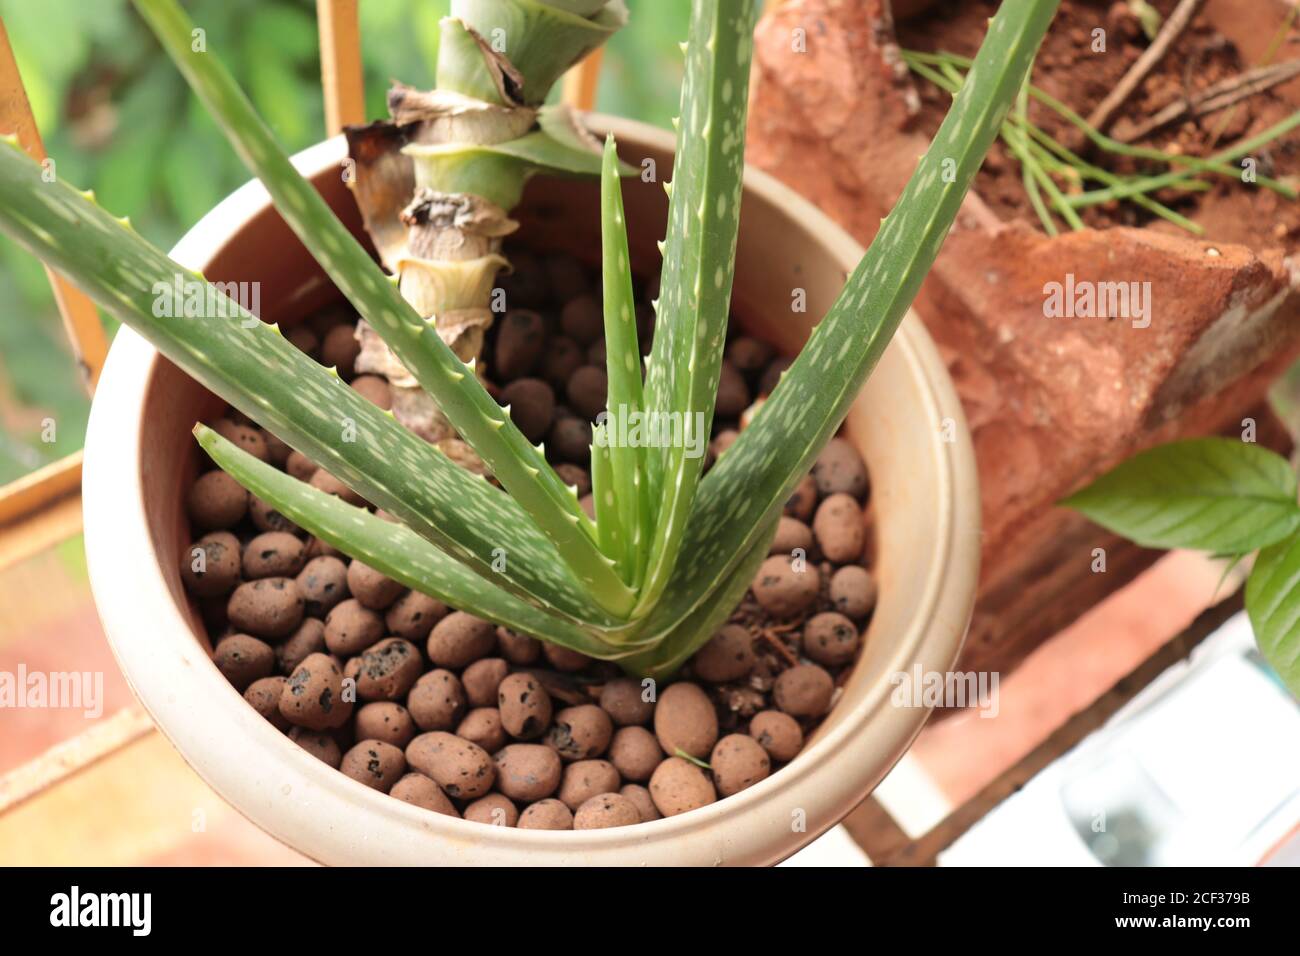 Aloe vera plant growing on balcony garden Stock Photo